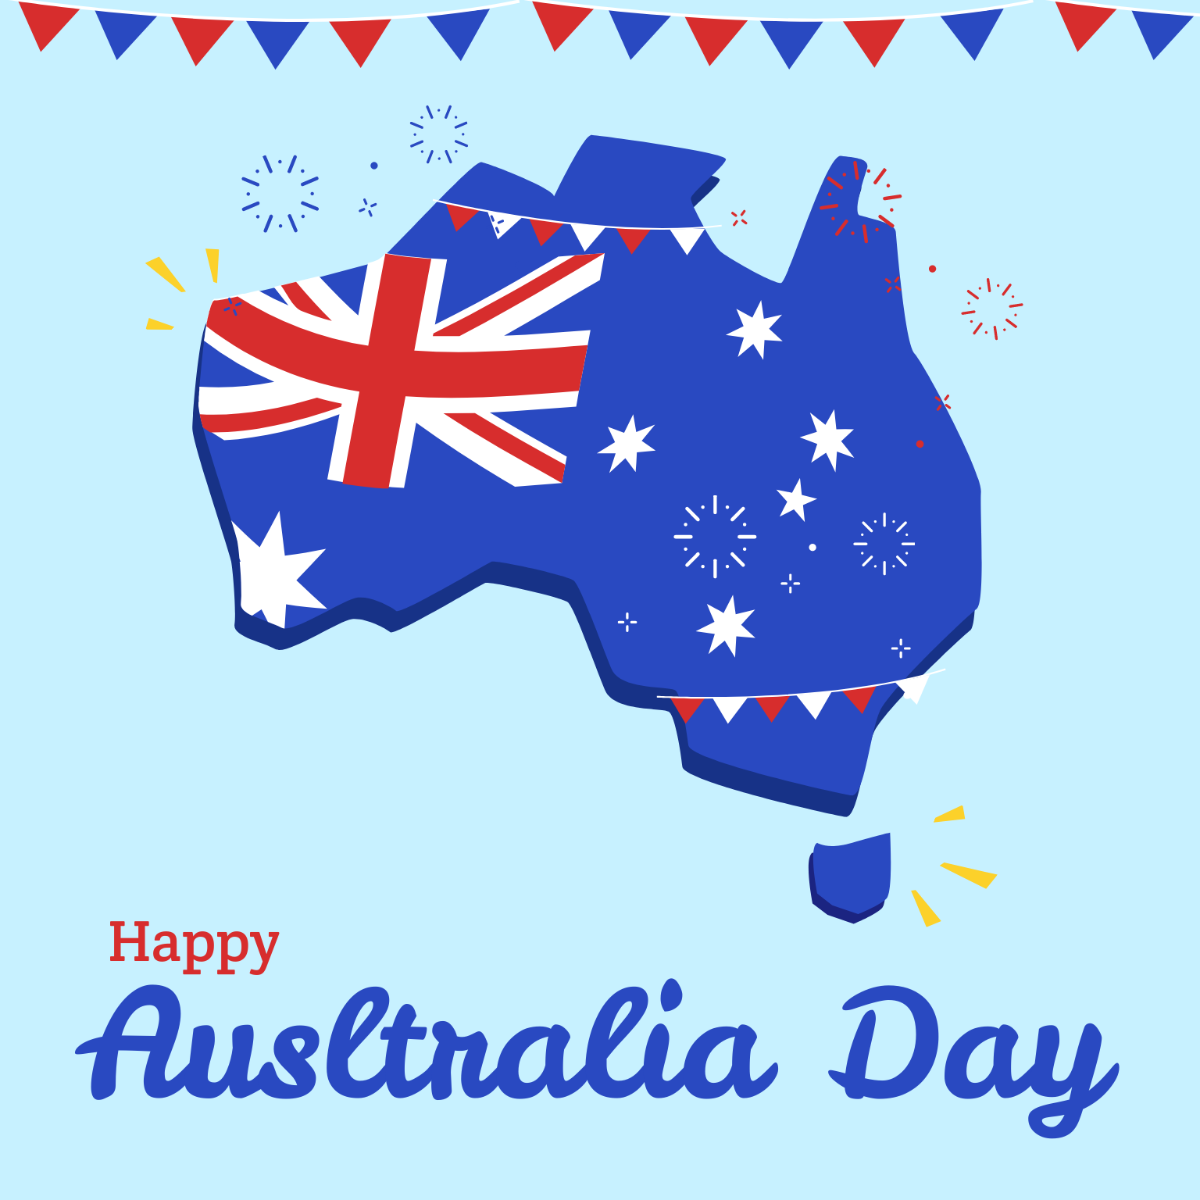 Free Happy Australia Day Illustration Template